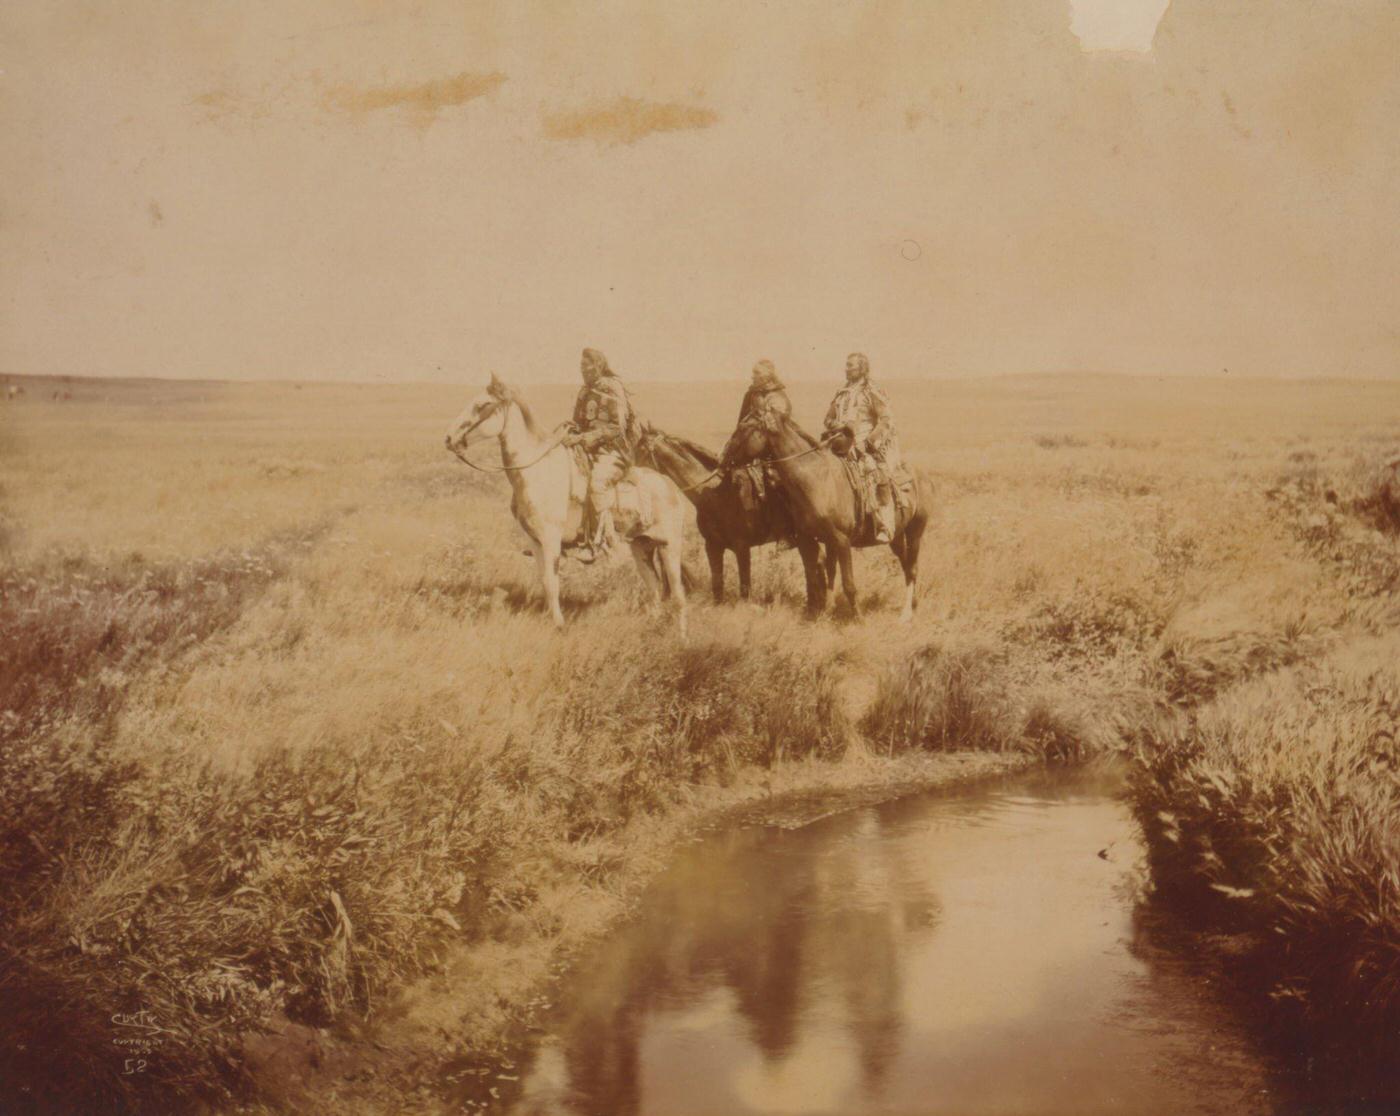 Three Piegan men on horseback in open grassland near pond, 1900